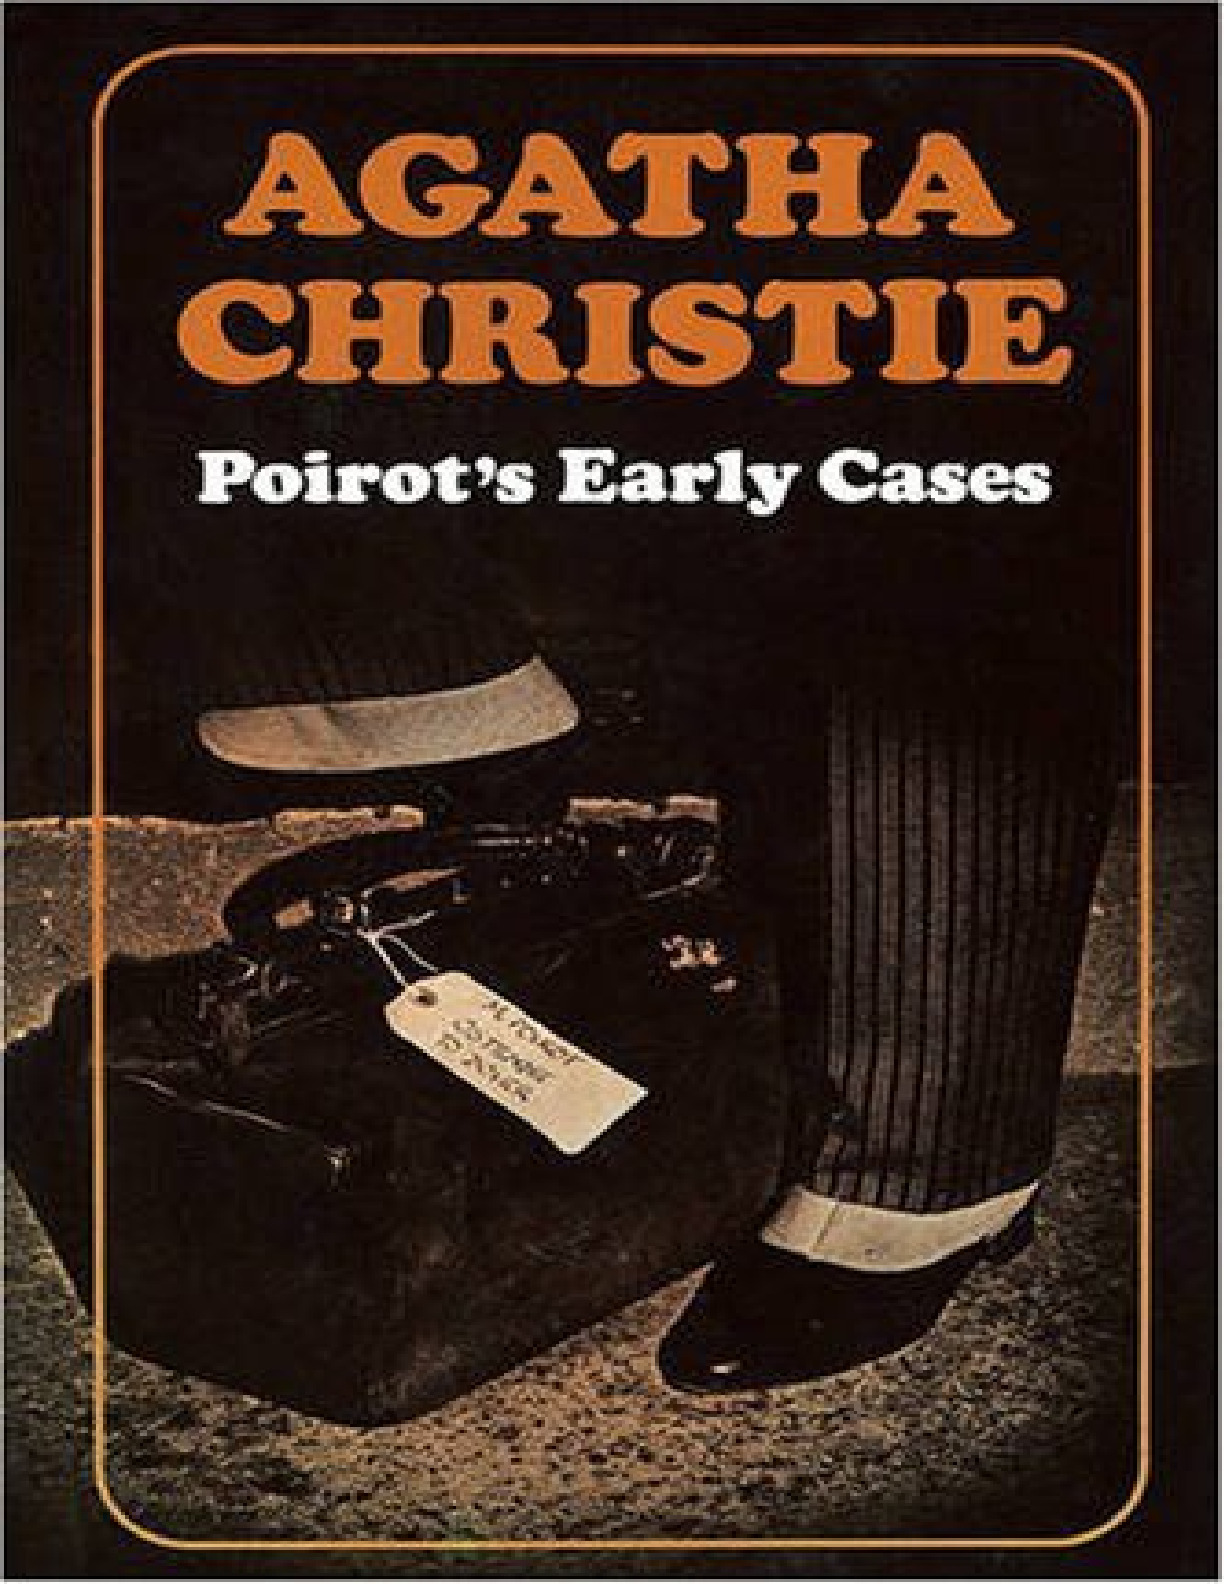 Hercule Poirot’s early cases – Agatha Christie